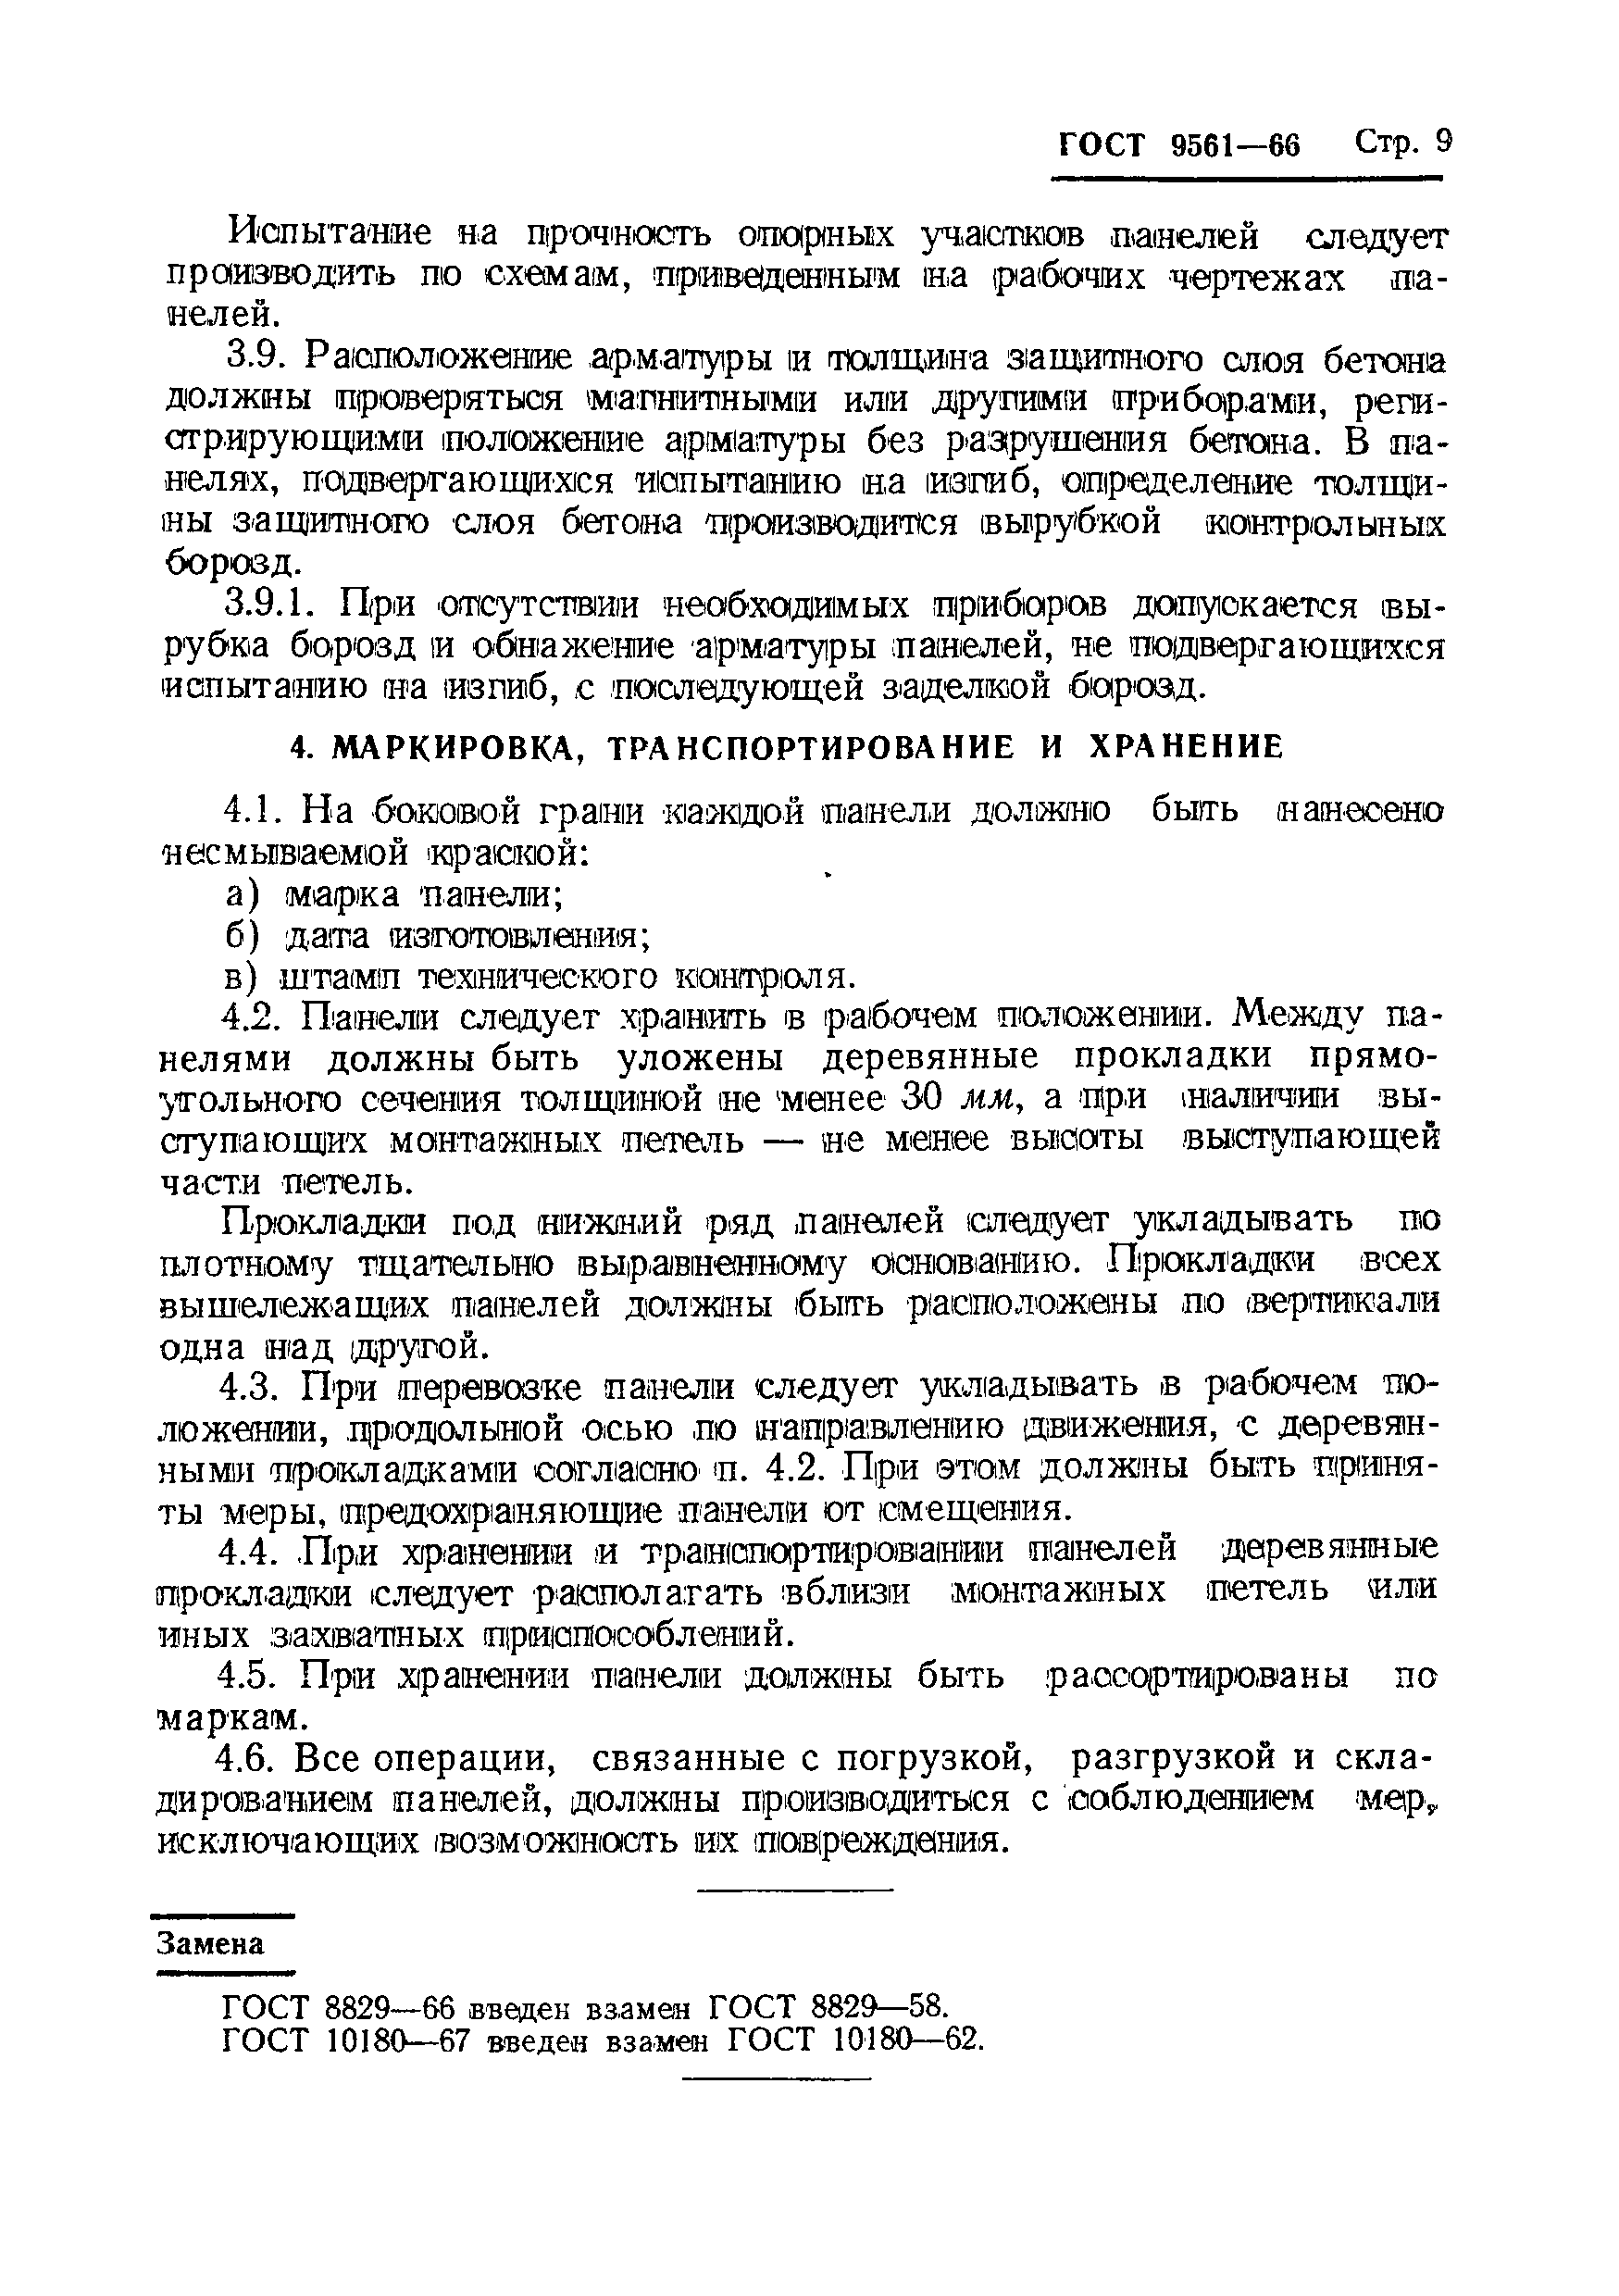 ГОСТ 9561-66